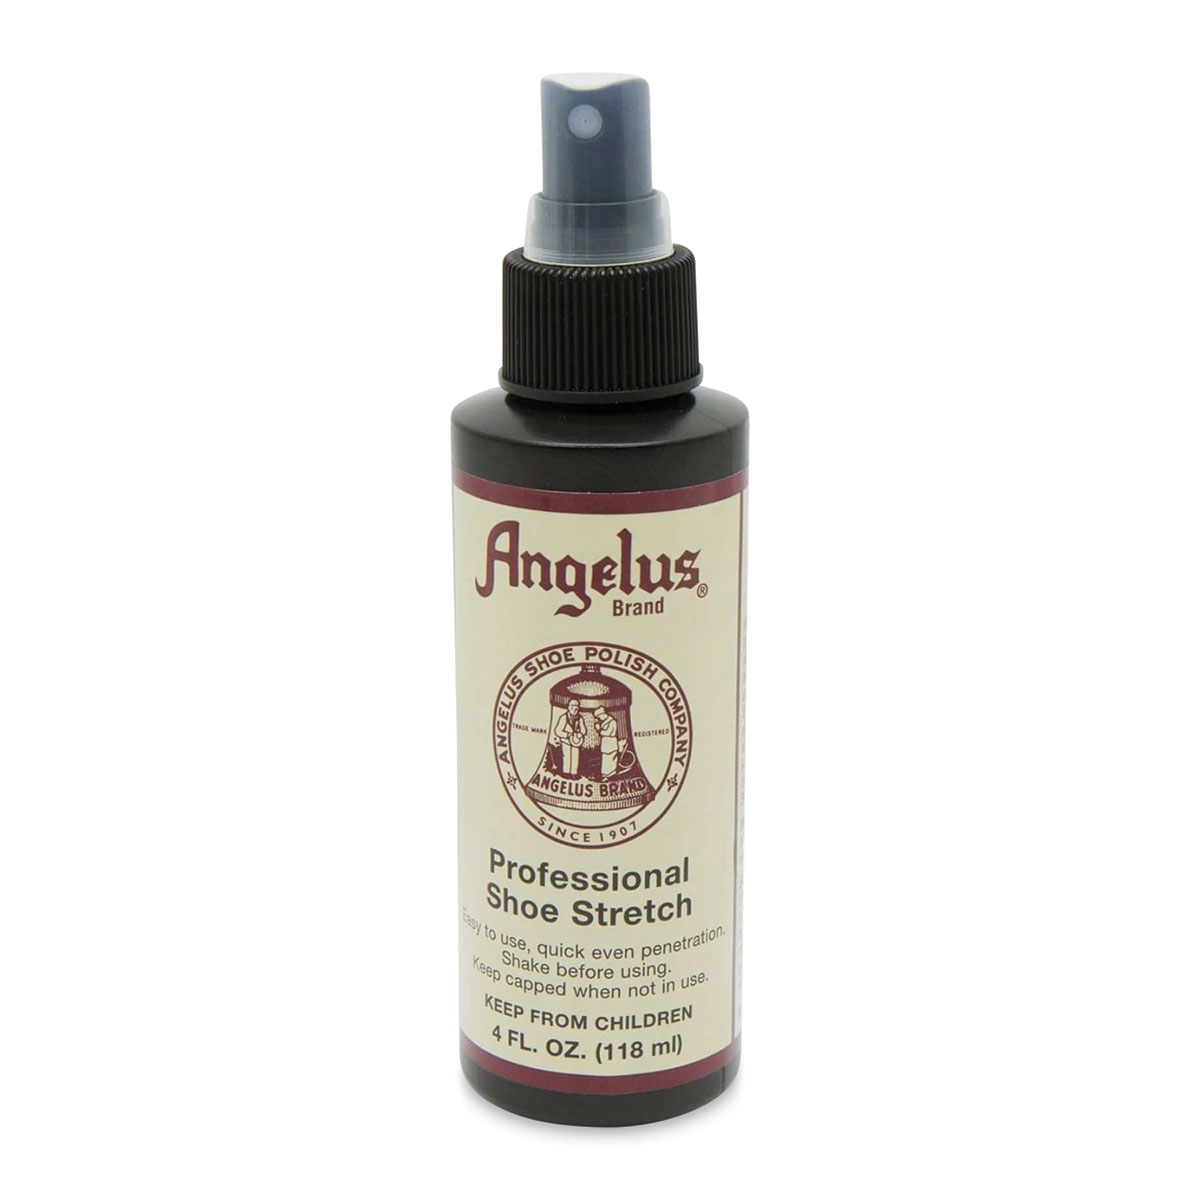 Angelus Easy Cleaner Kit — 14th Street Supply